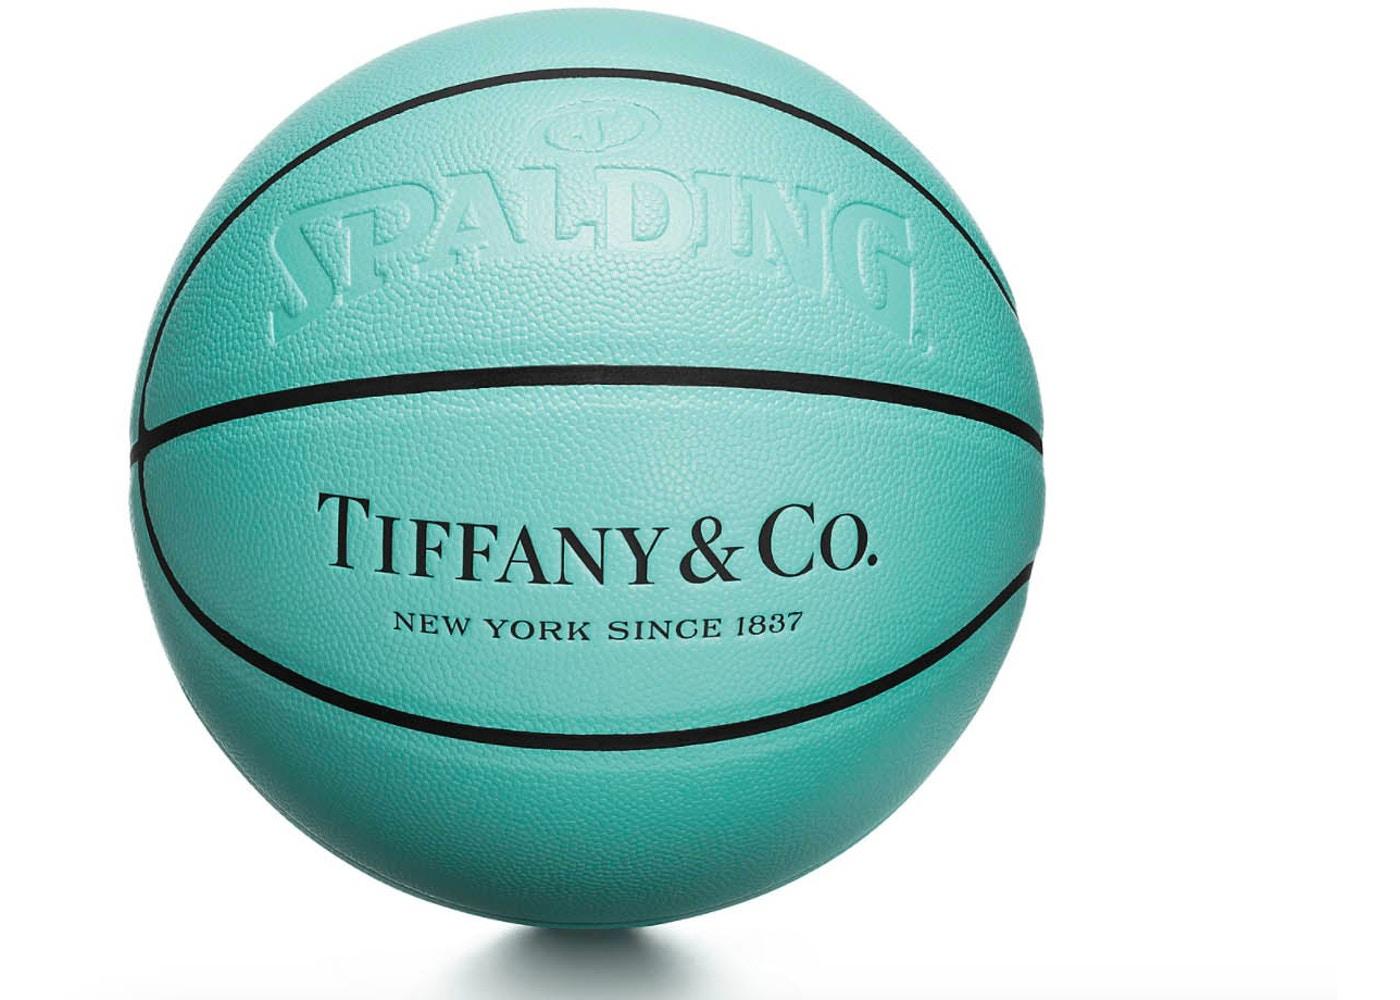 tiffany & co basketball